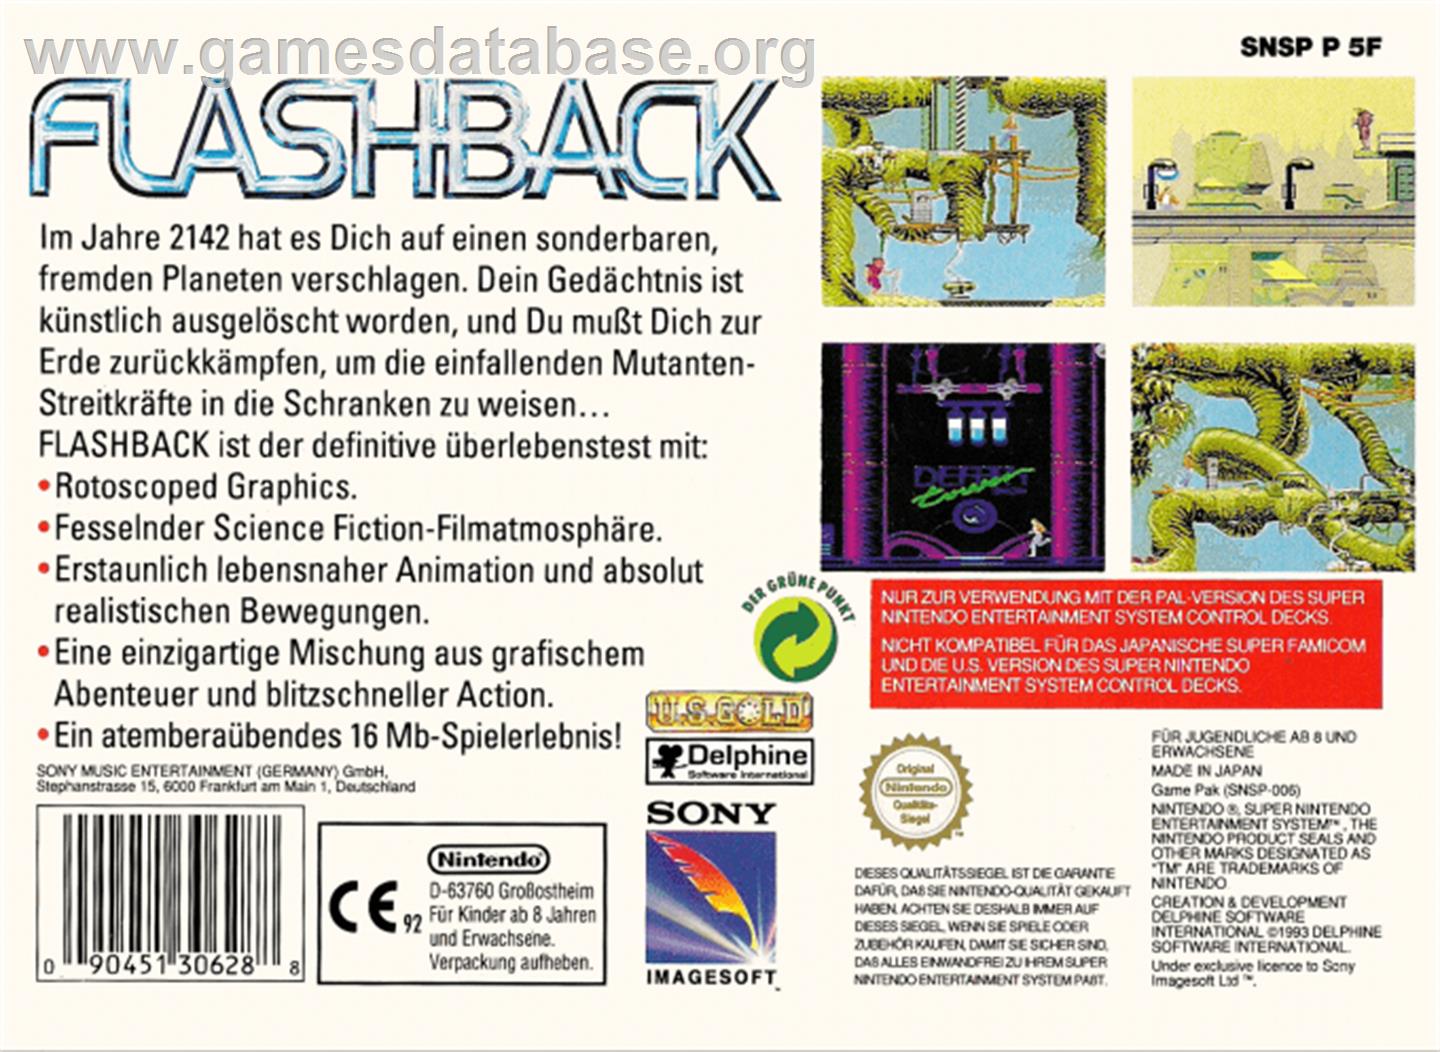 Flashback: The Quest for Identity - Nintendo SNES - Artwork - Box Back